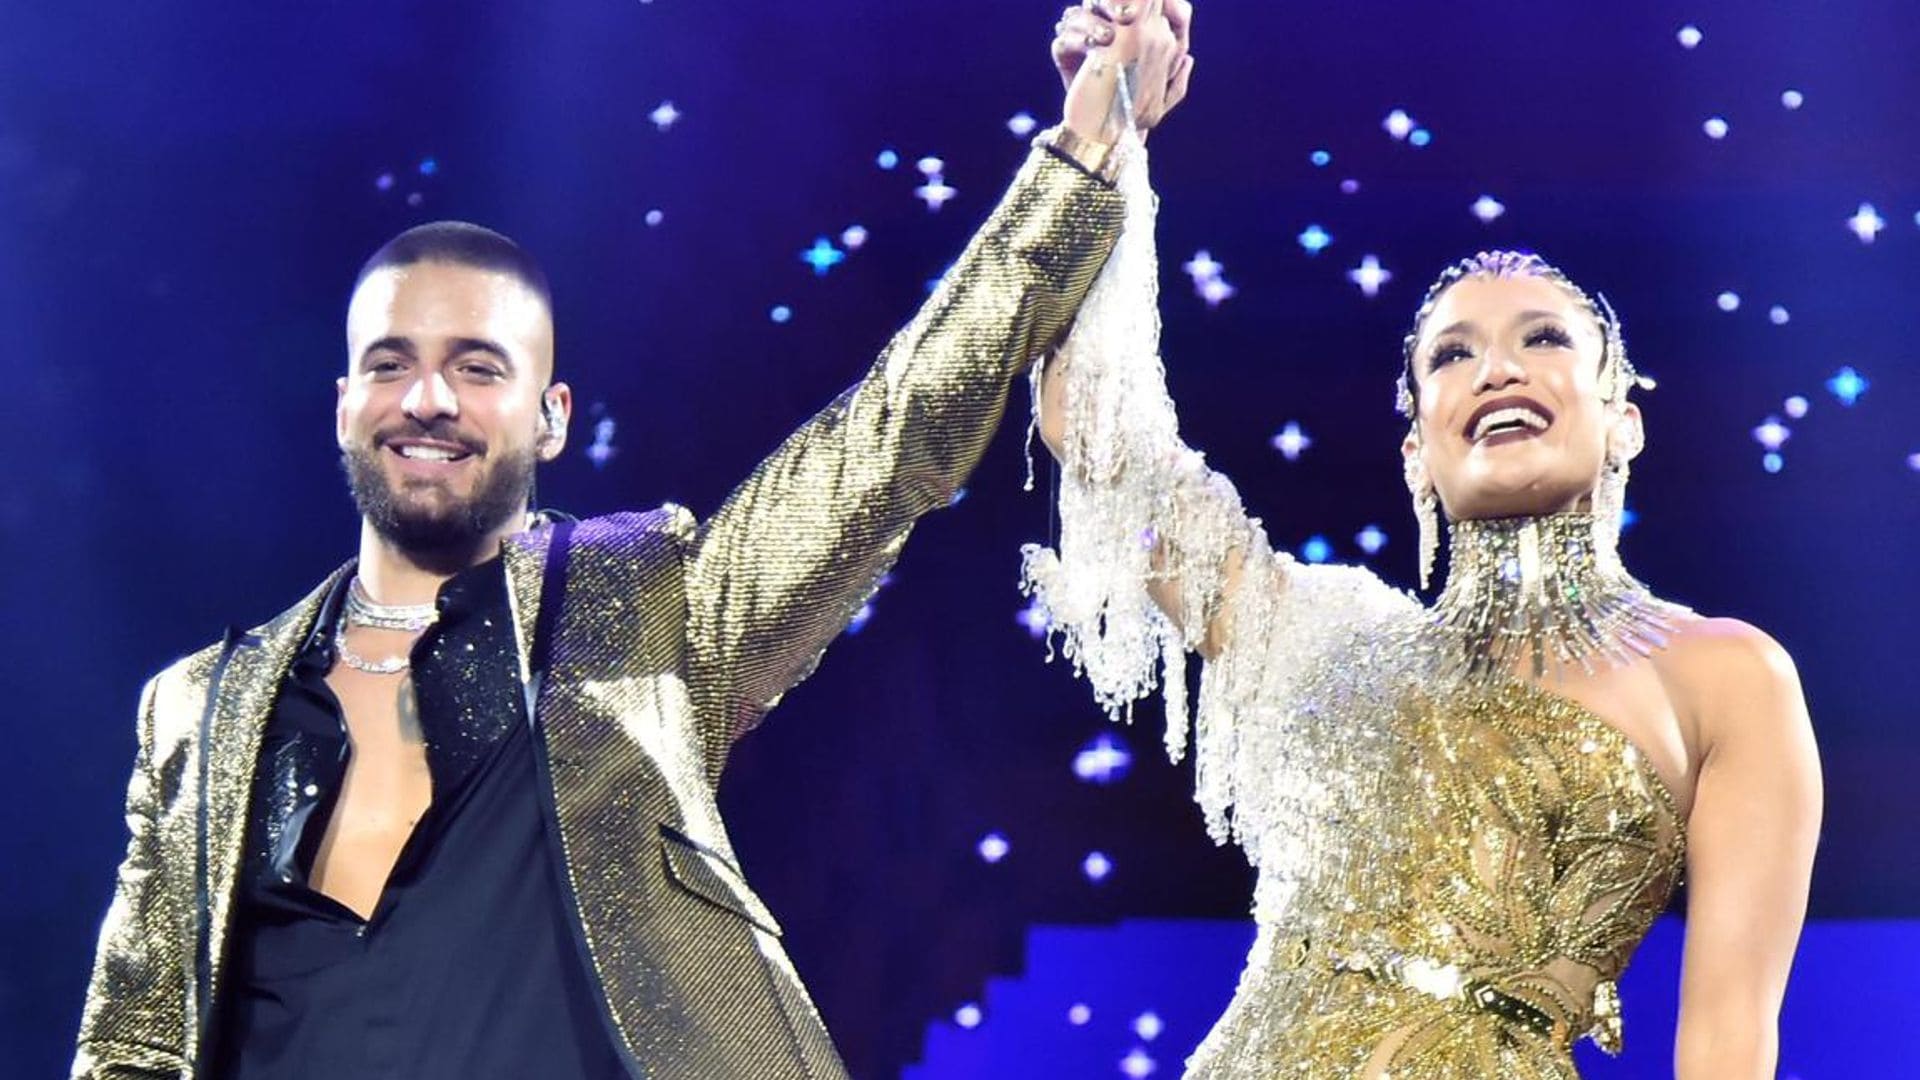 Jennifer Lopez and Maluma to perform together: Details